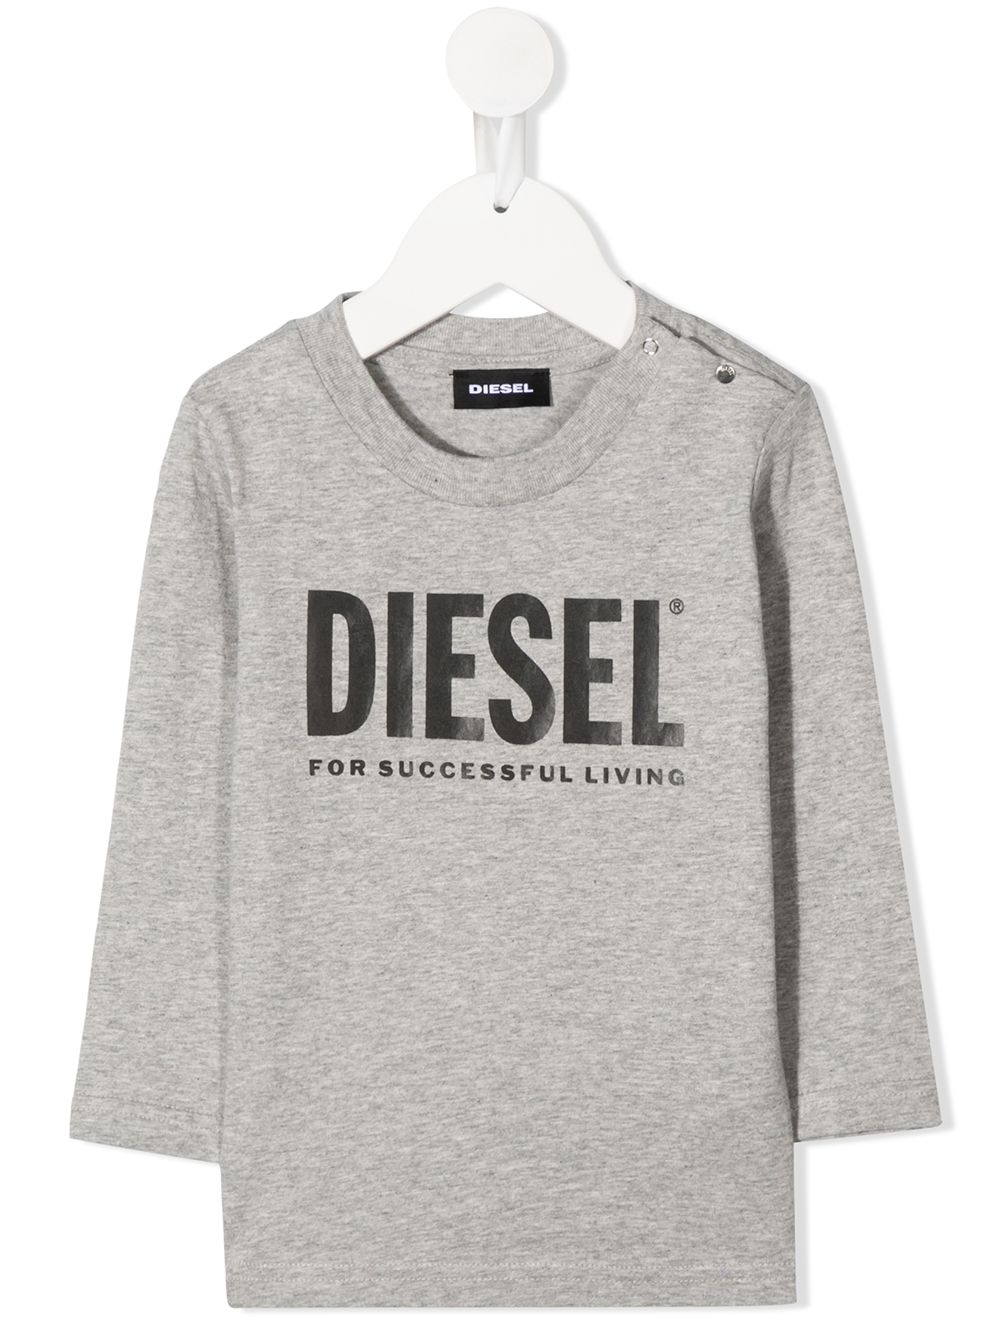 diesel baby clothes sale